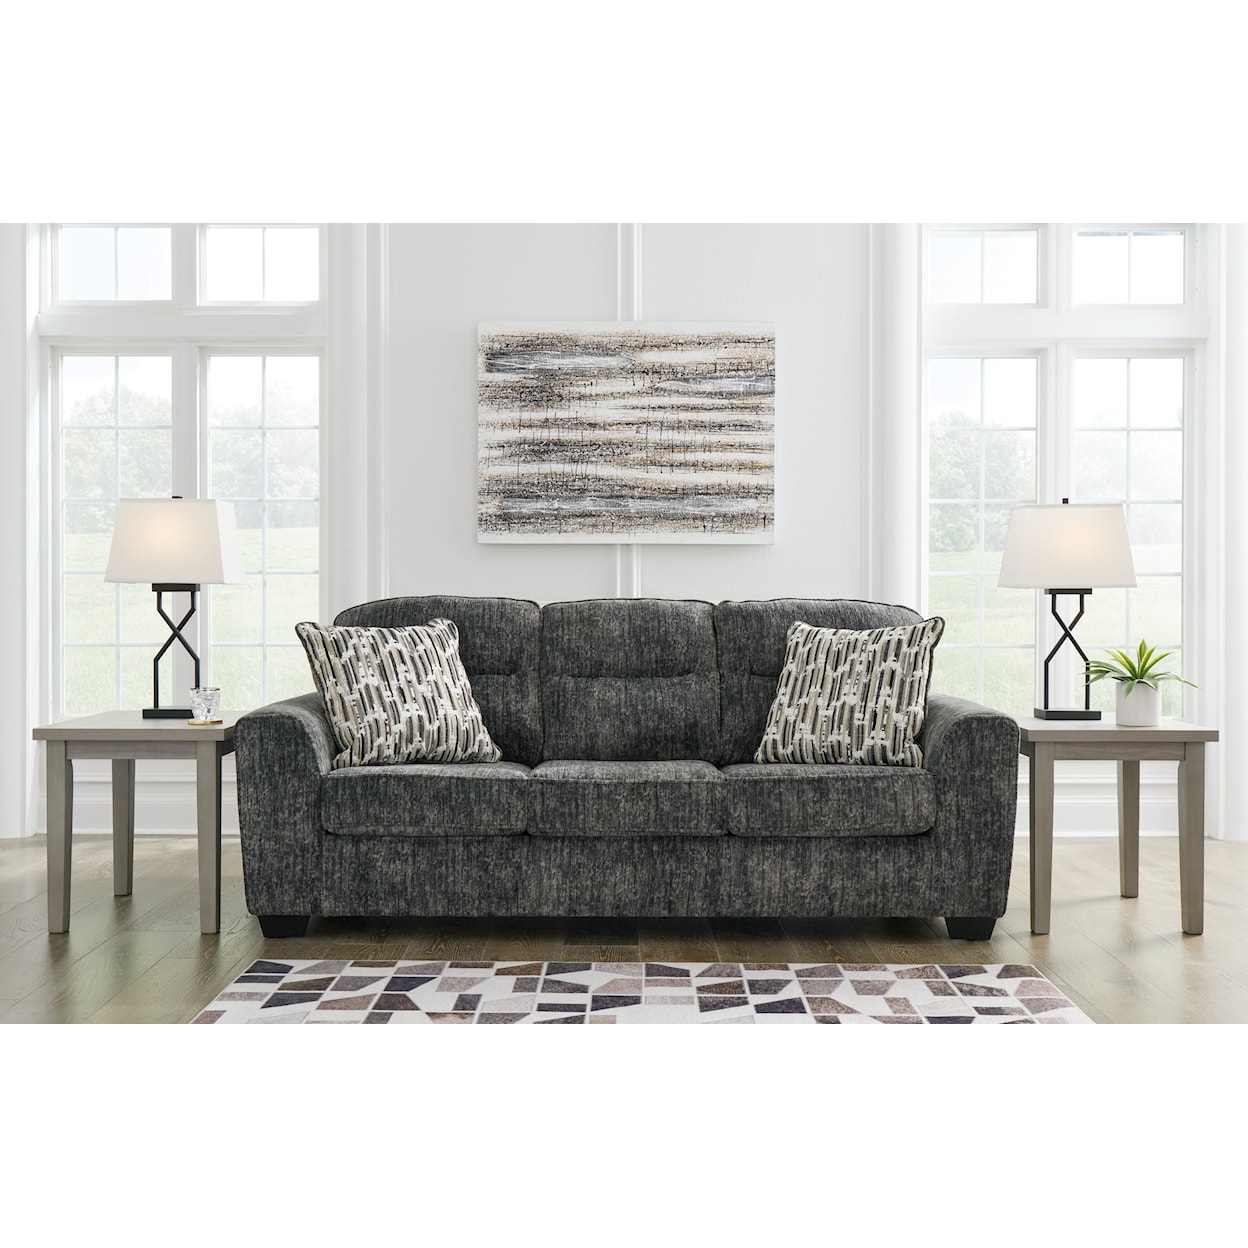 StyleLine Lonoke Sofa